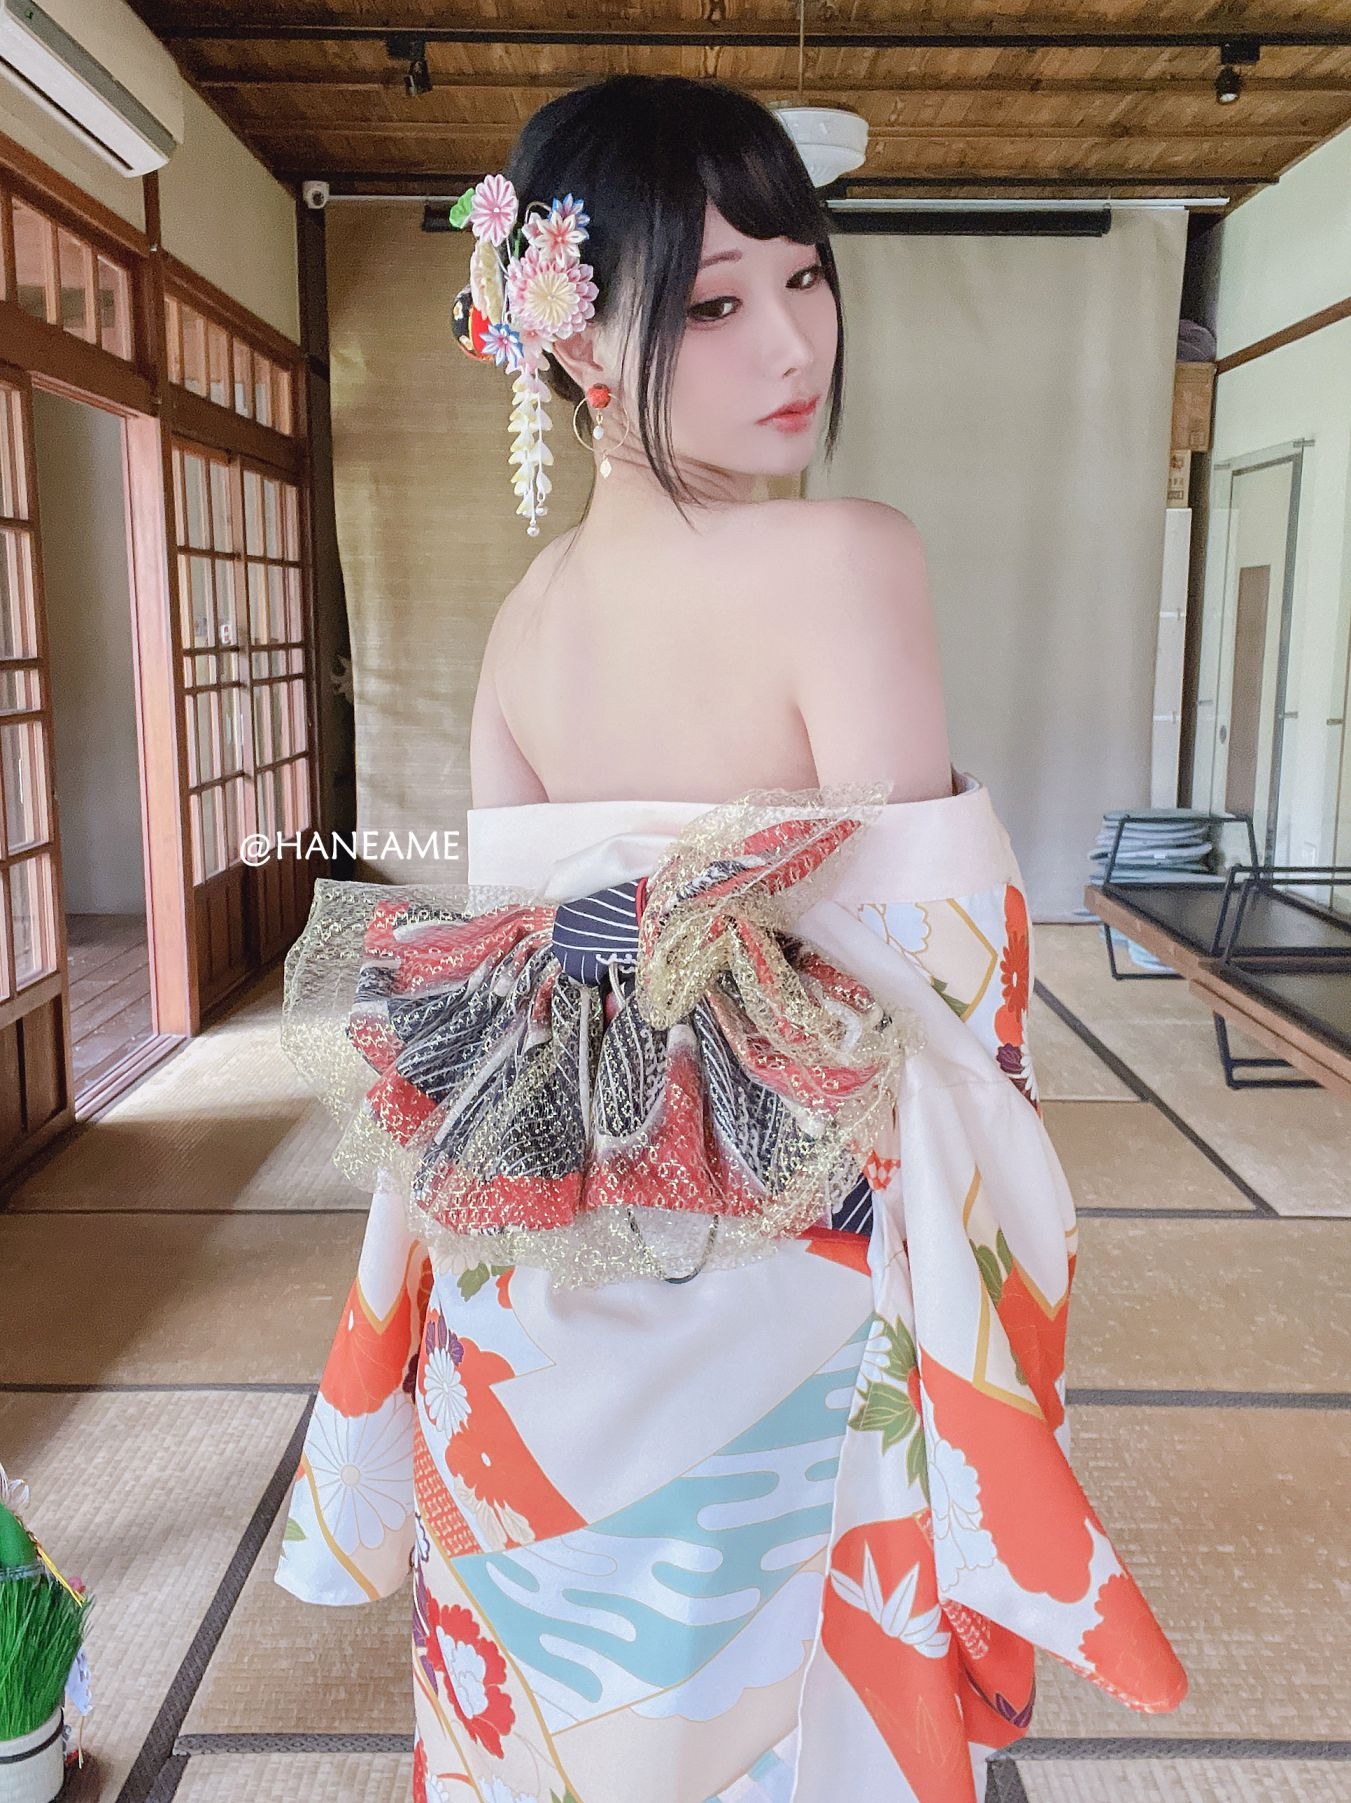 HaneAme 雨波 — Flower Print Kimono Girl(43)